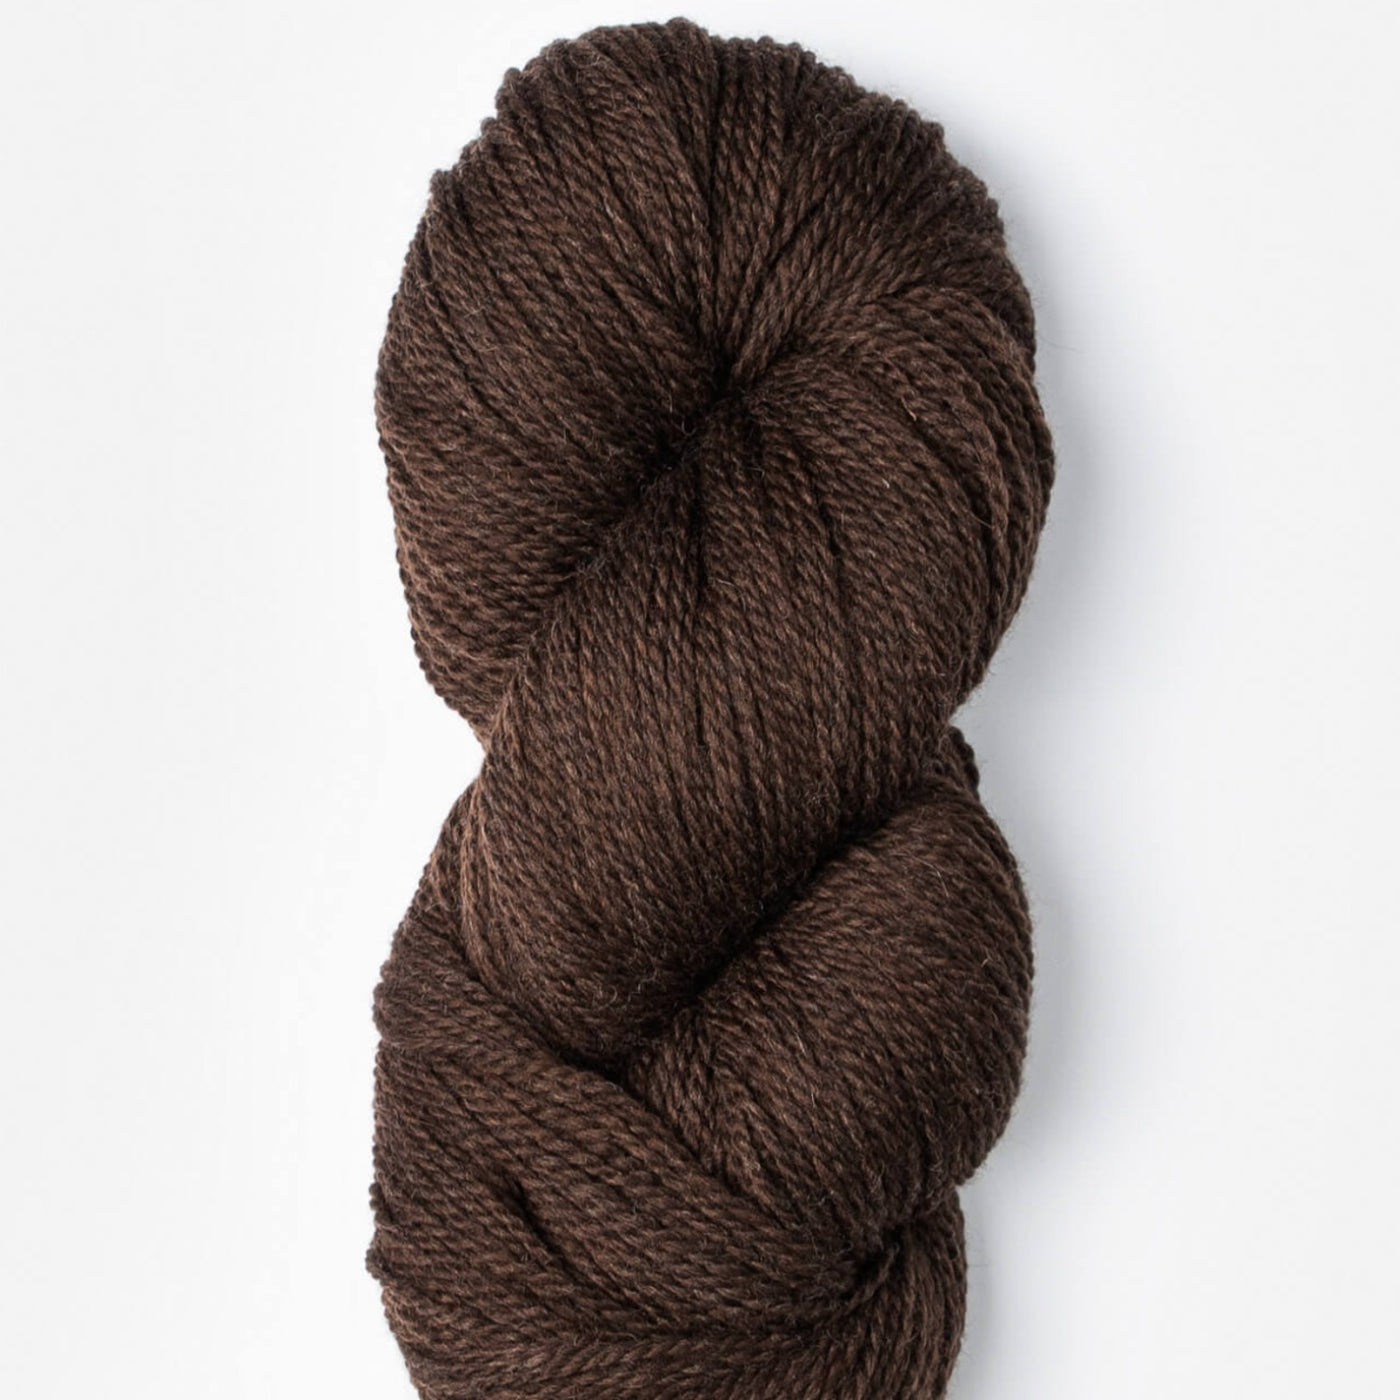 Woolstok in Dark Chocolate from Blue Sky Fibers - 1313  (50g)